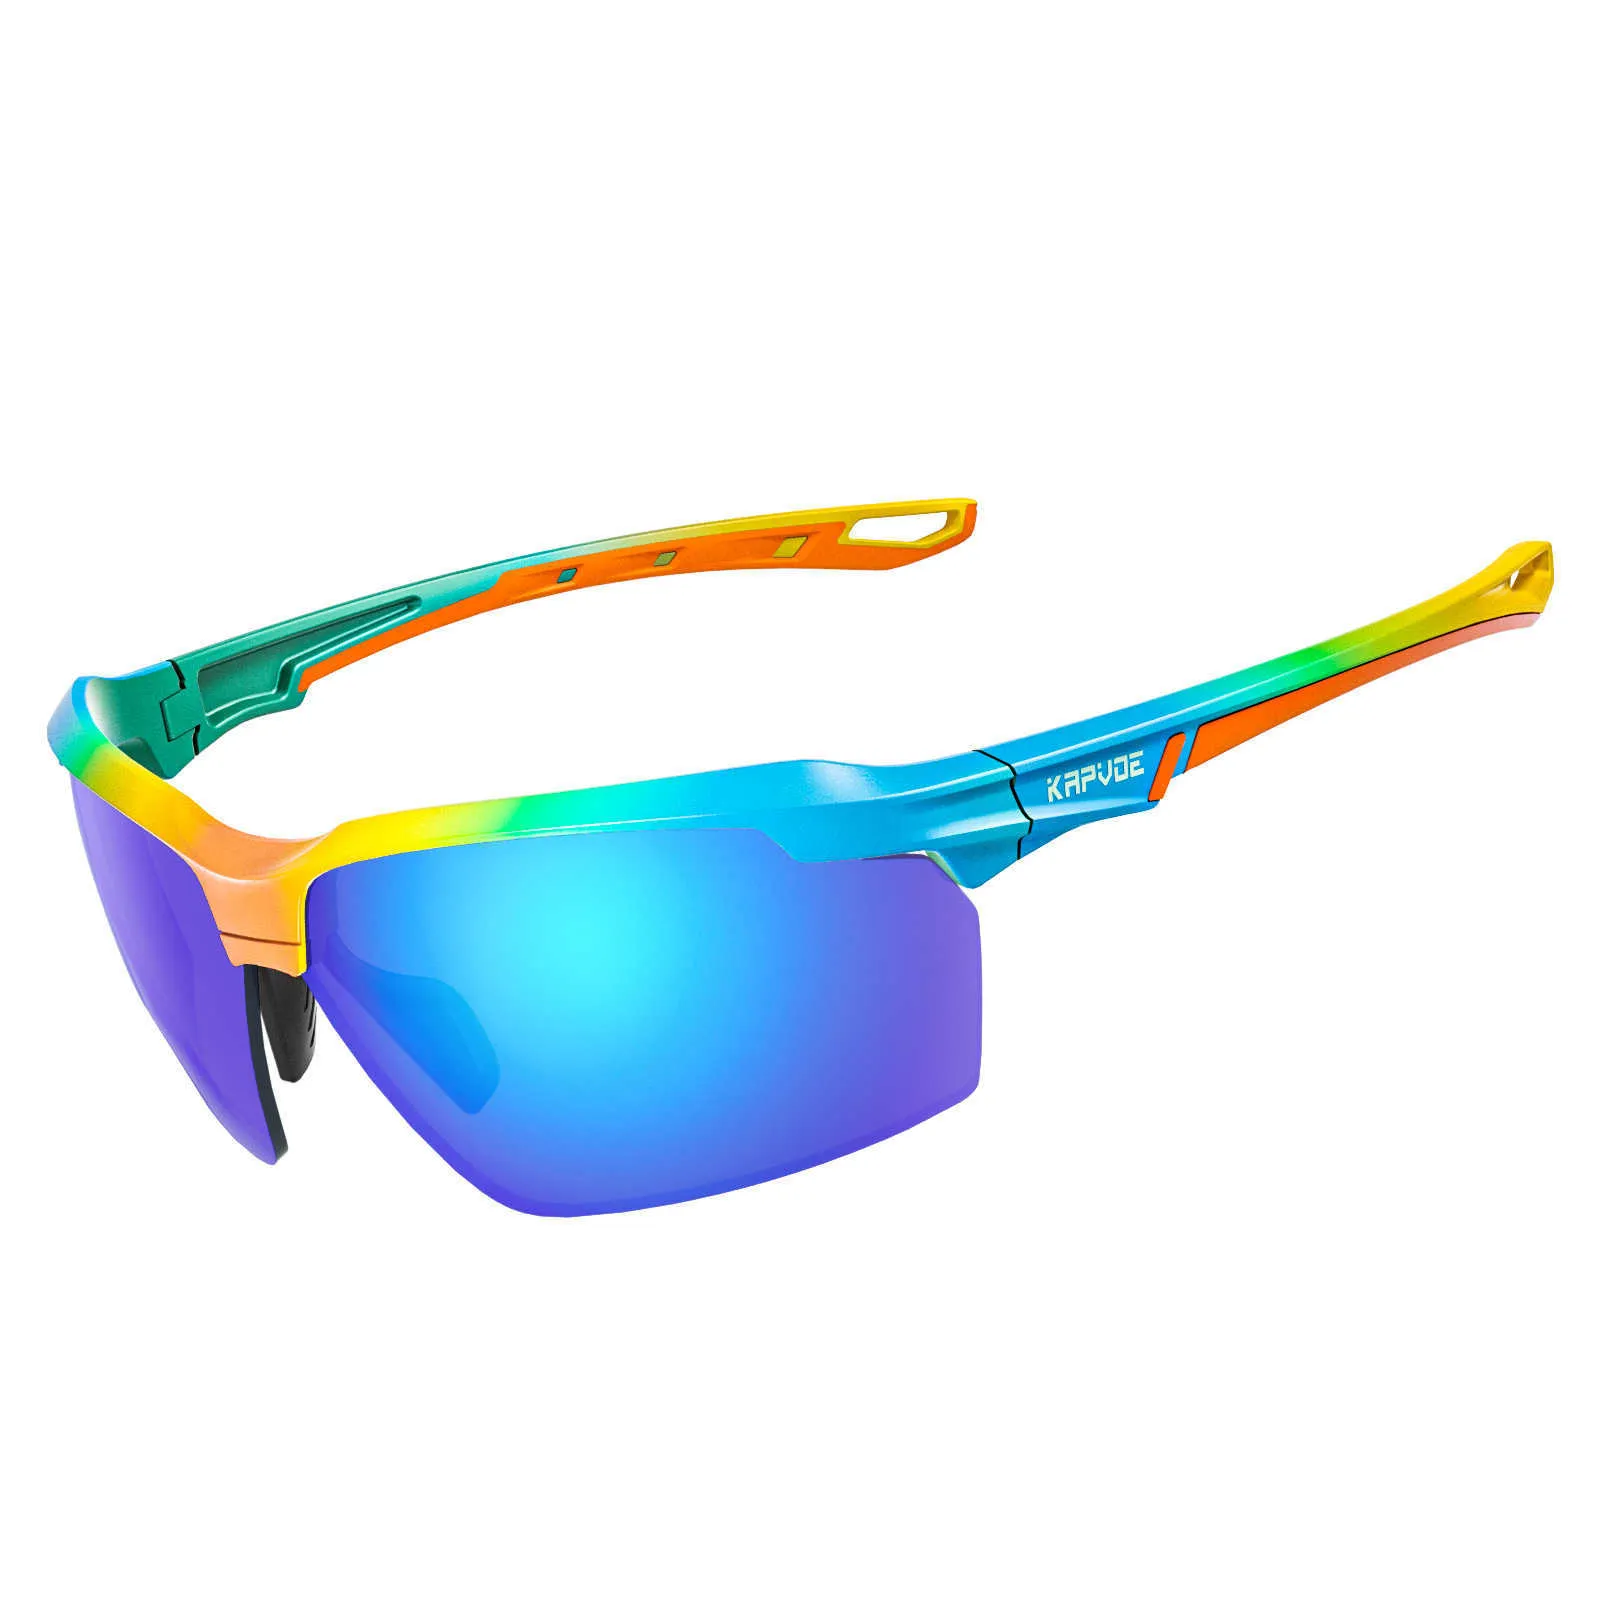 Shop Sports Sunglasses Online - Buy Best Prices